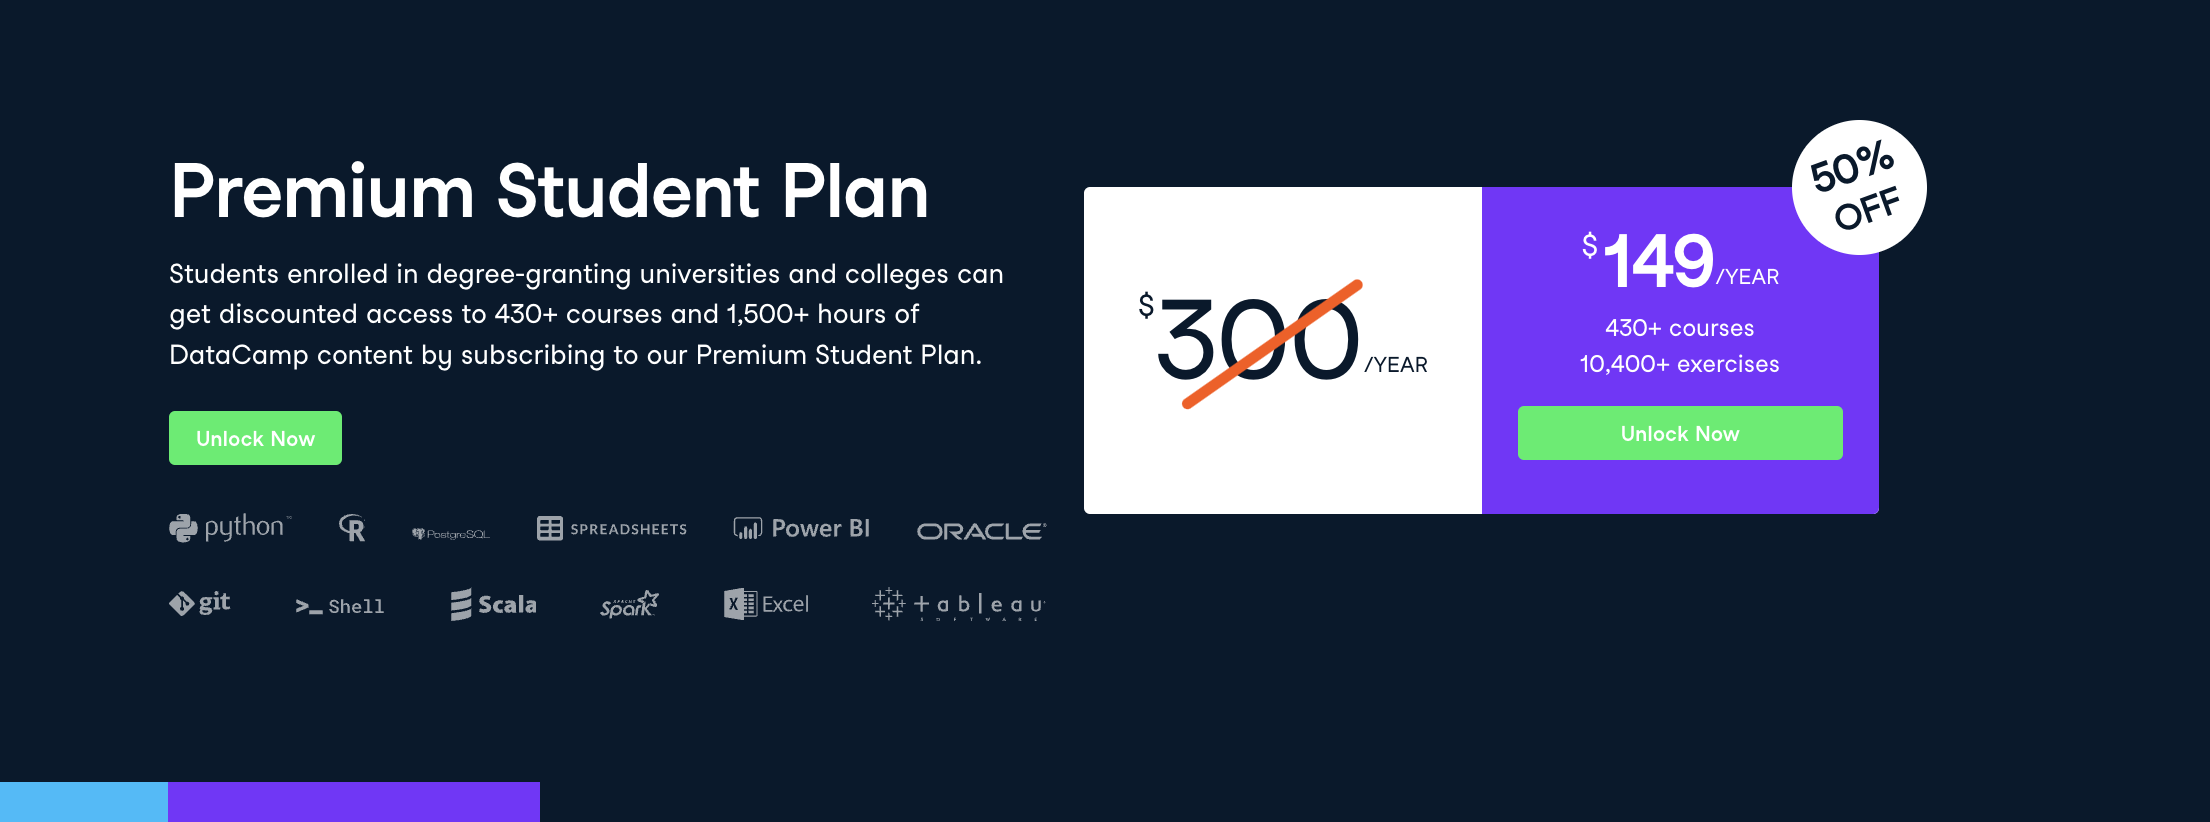 Teachers & Students Get Premium DataCamp Free for Entire Academic Careers